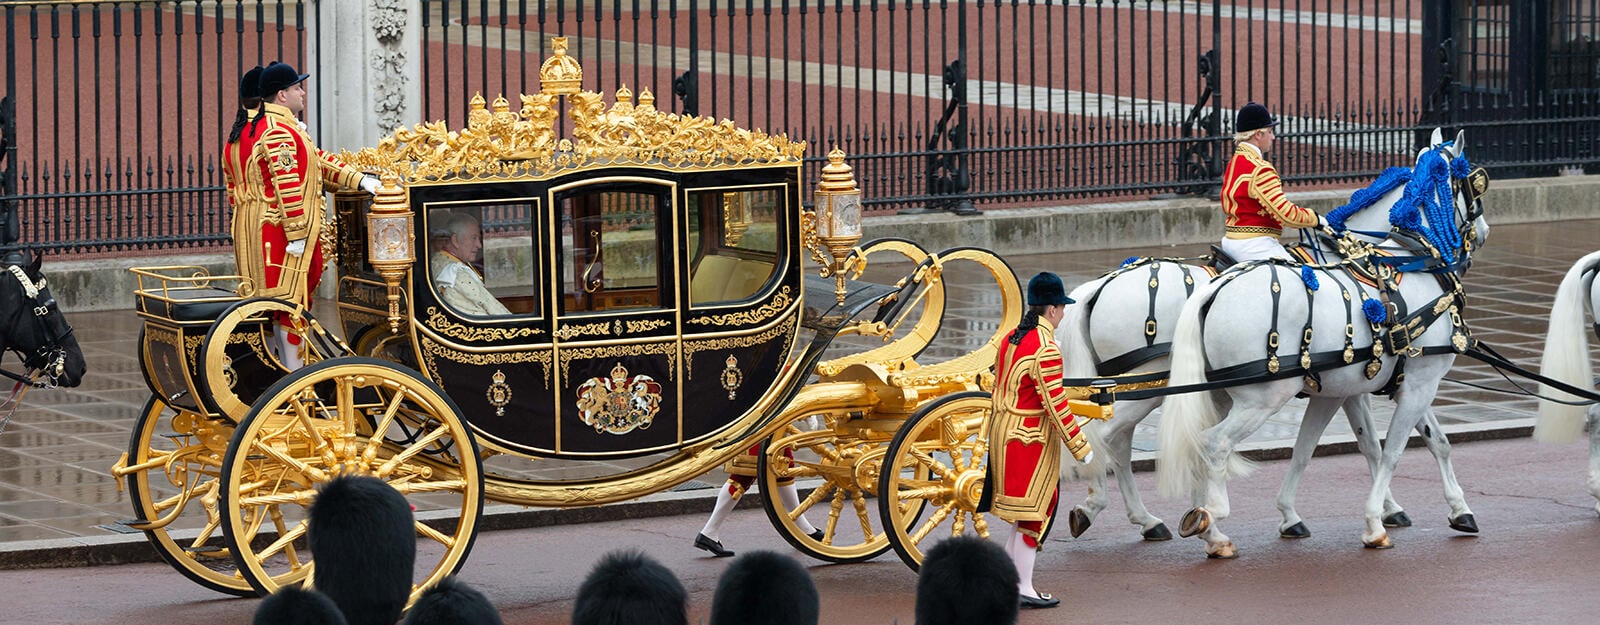 The Diamond Jubilee State Coach during the Coronation of King Charles III